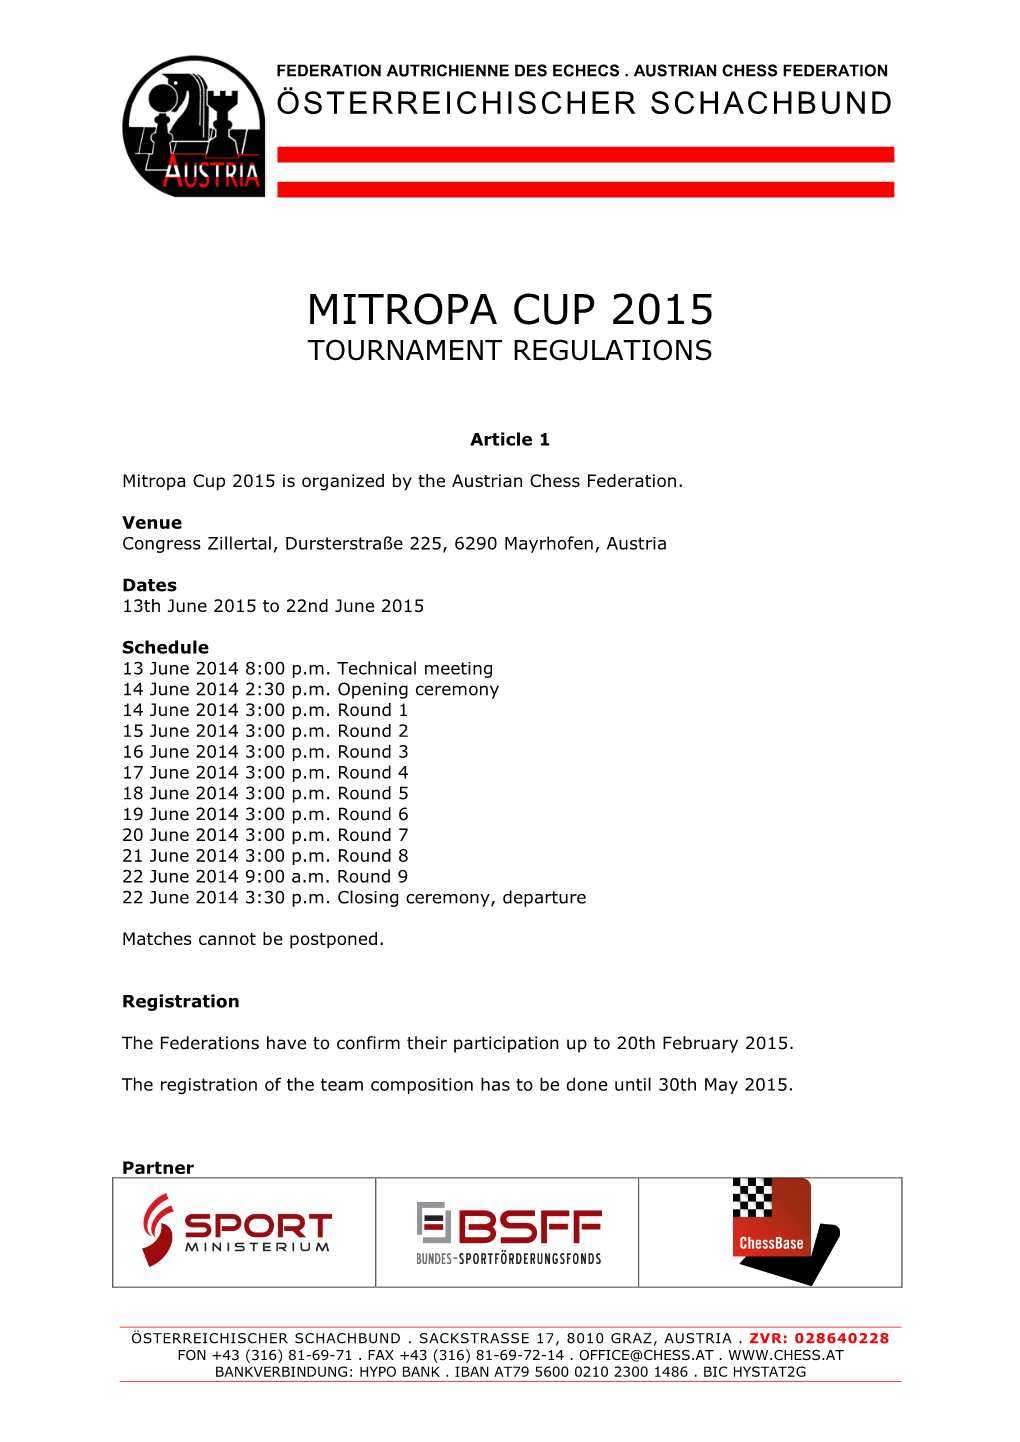 Mitropa Cup 2015 Tournament Regulations